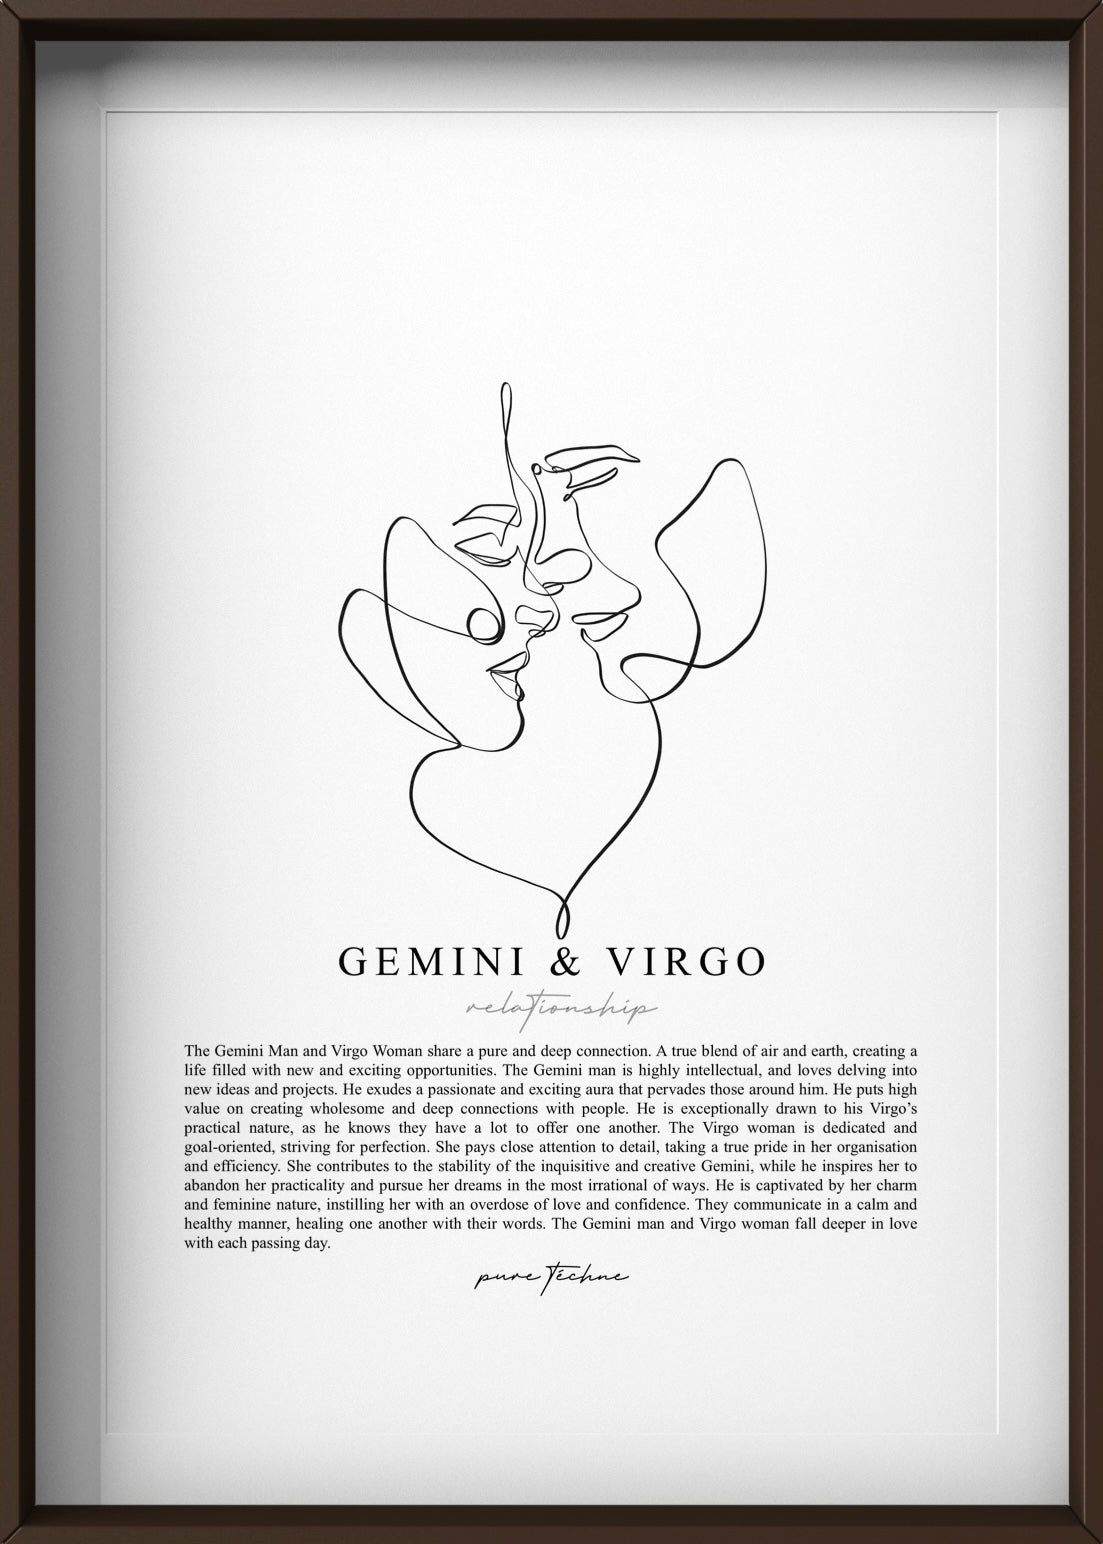 Gemini Man & Virgo Woman